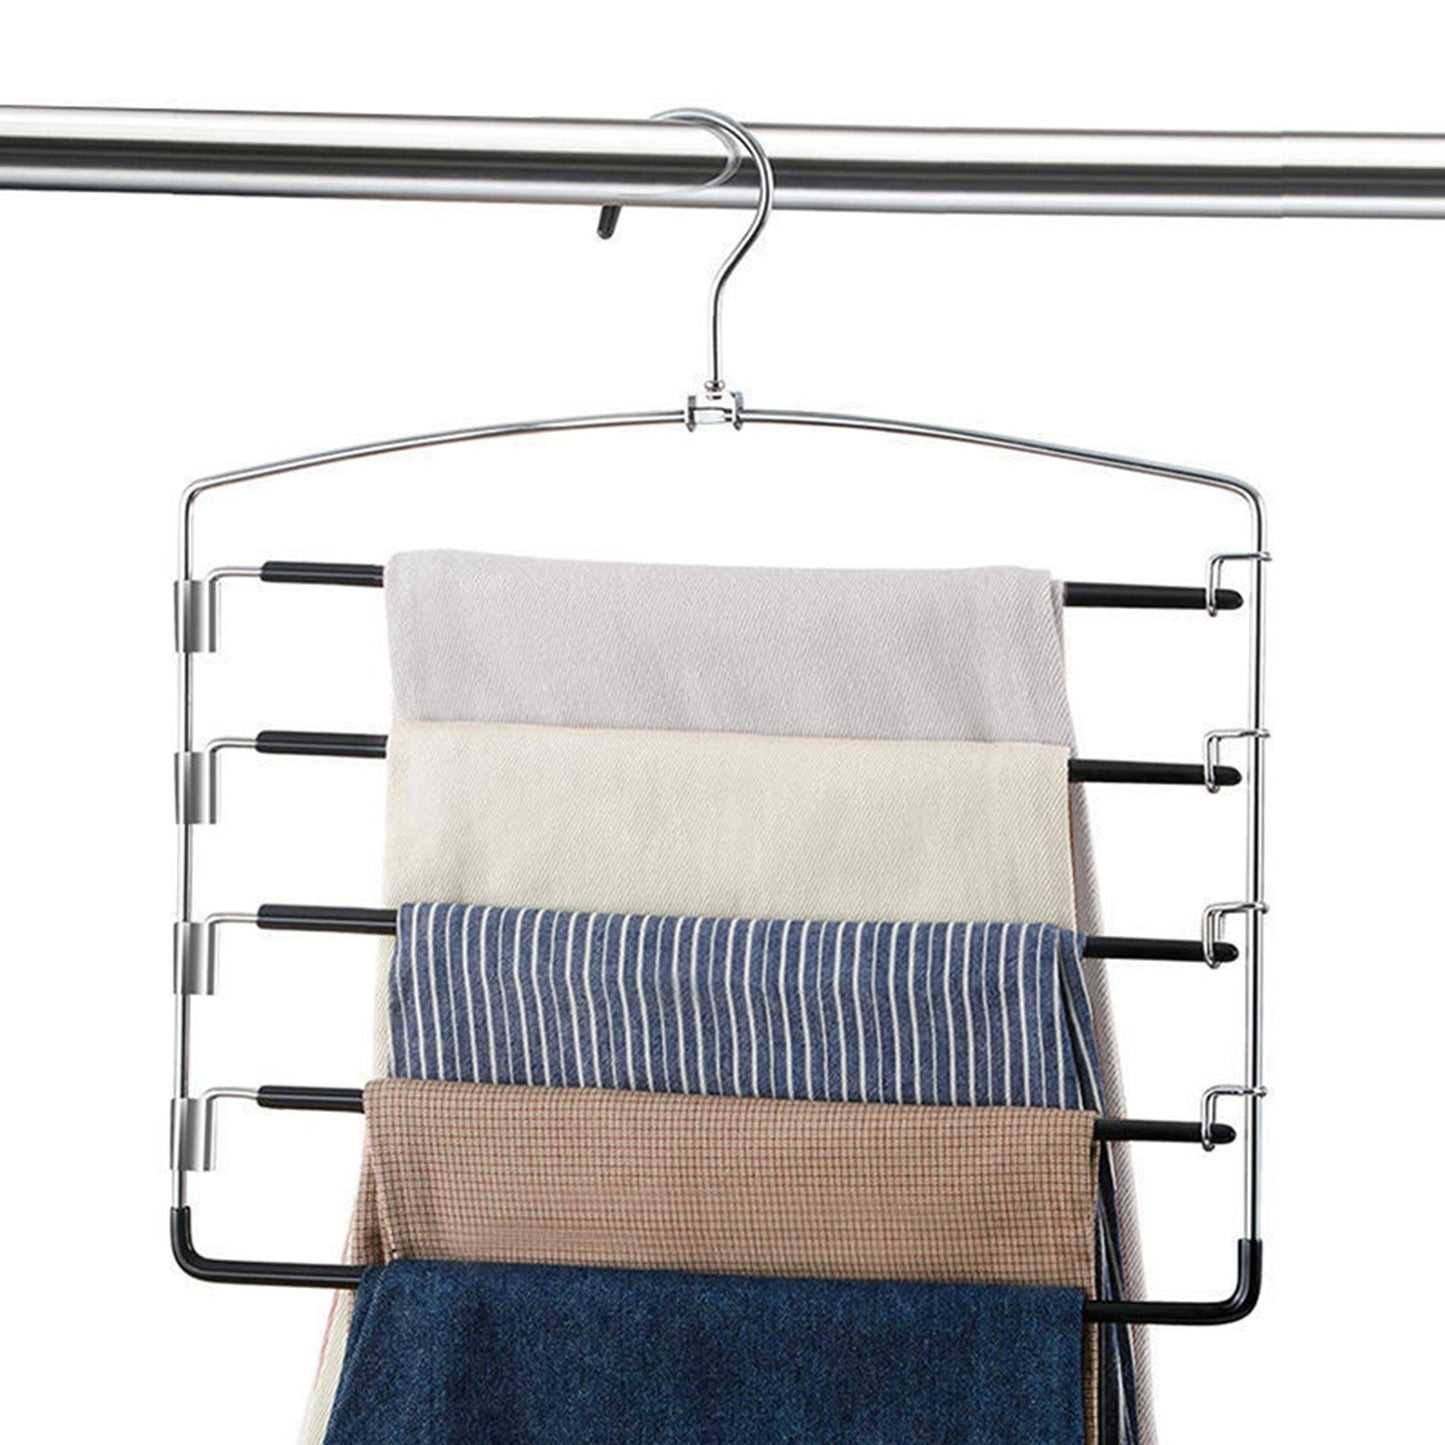 2PCS 5in1 Pants Clothes Hook Space Saving Hanger Drying Rack Hanger Closet Organizer